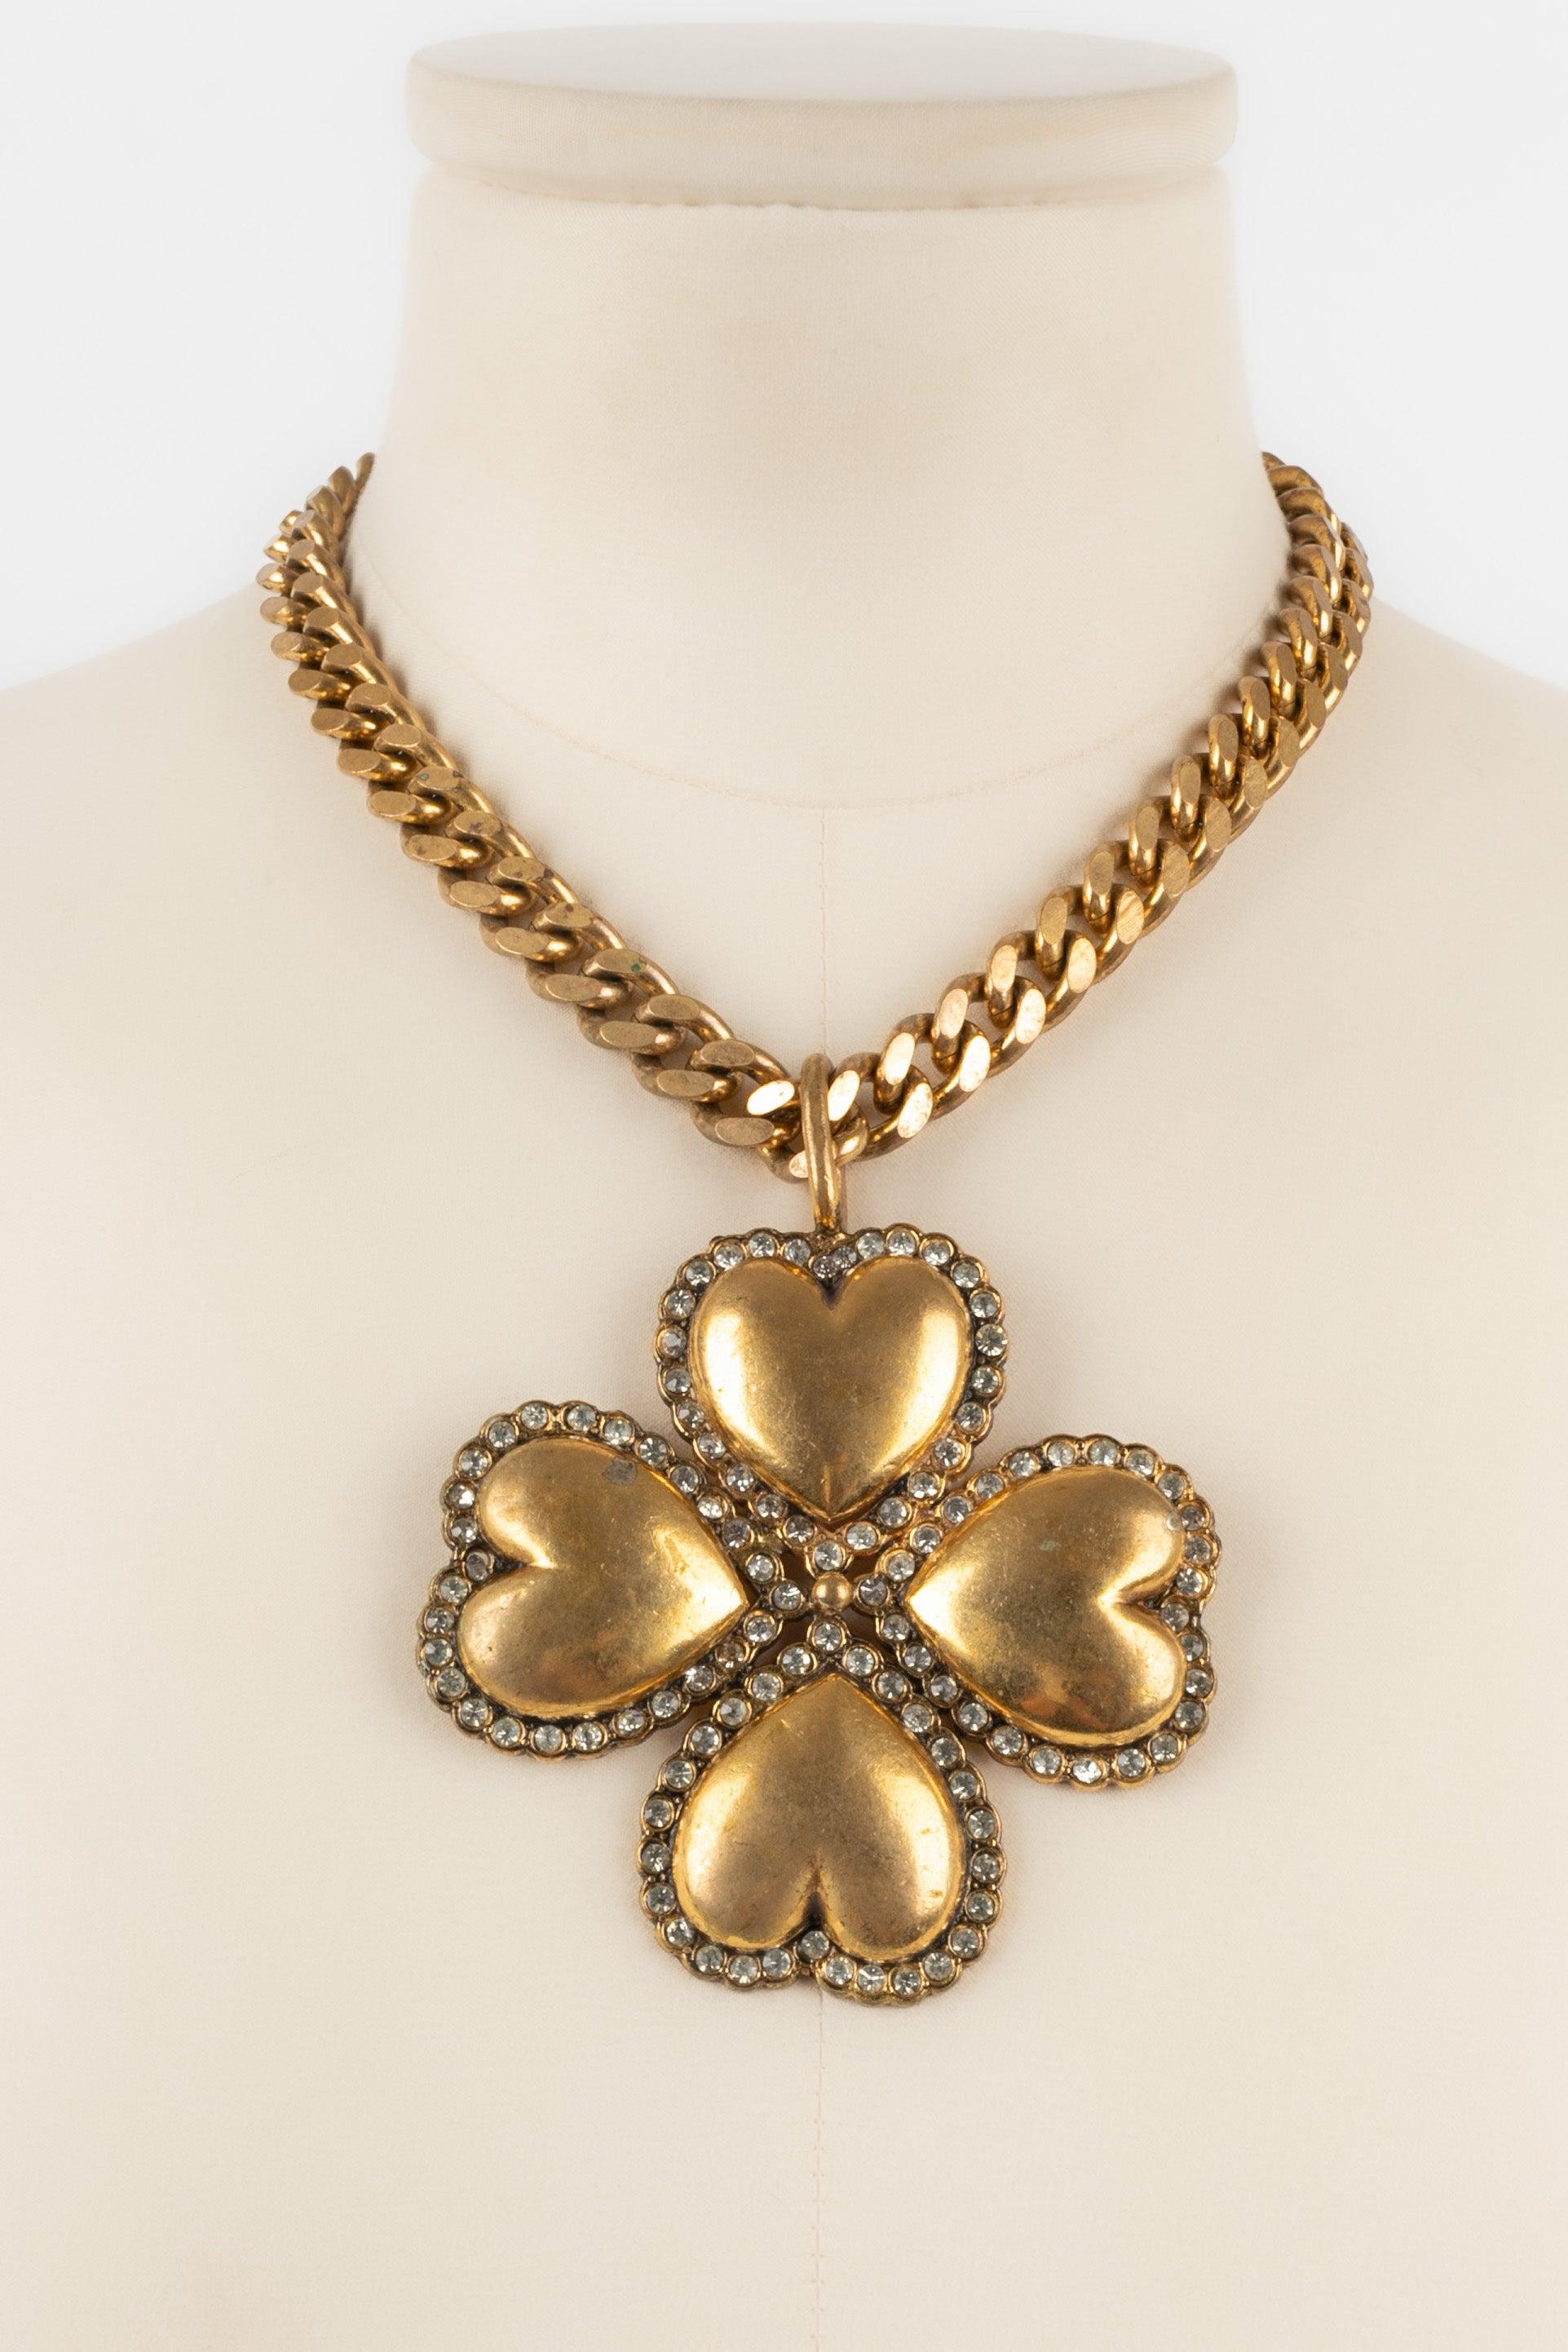 Chanel Golden Metal Necklace with a Four-leaf Clover-shaped Pendant, 1980s In Excellent Condition For Sale In SAINT-OUEN-SUR-SEINE, FR